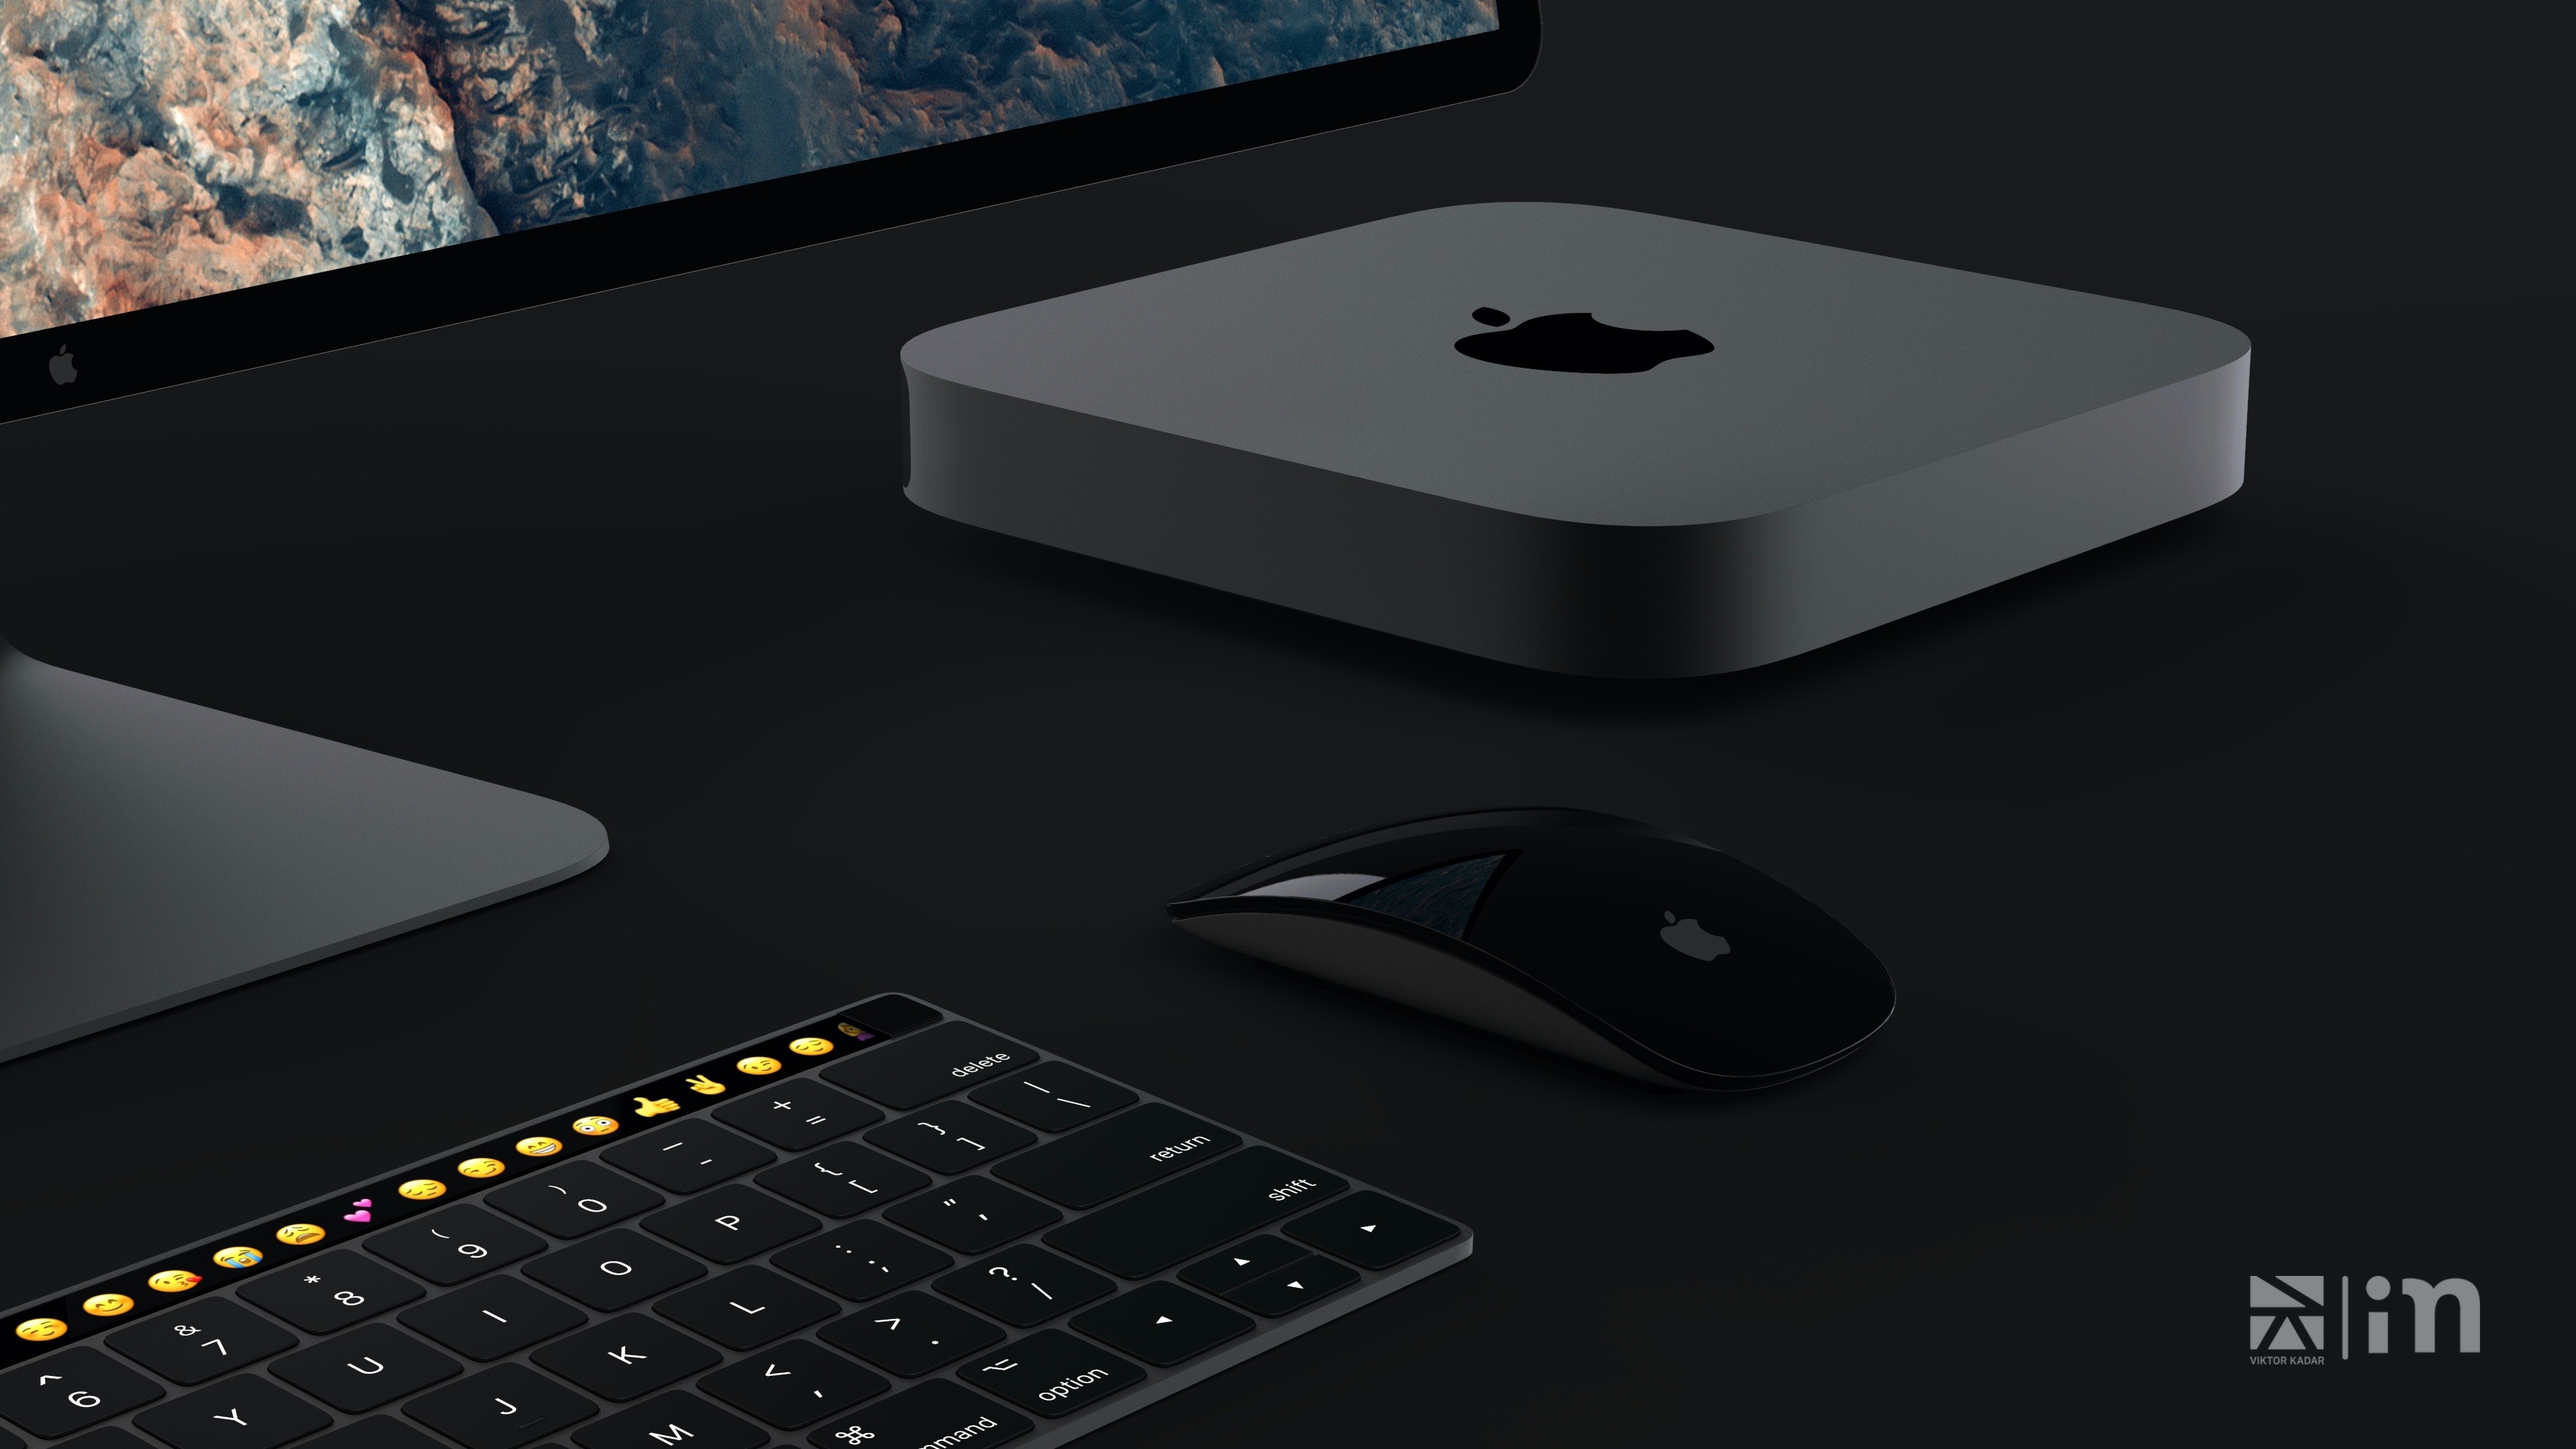 Mac mini concept pictures space gray treatment alongside new Apple